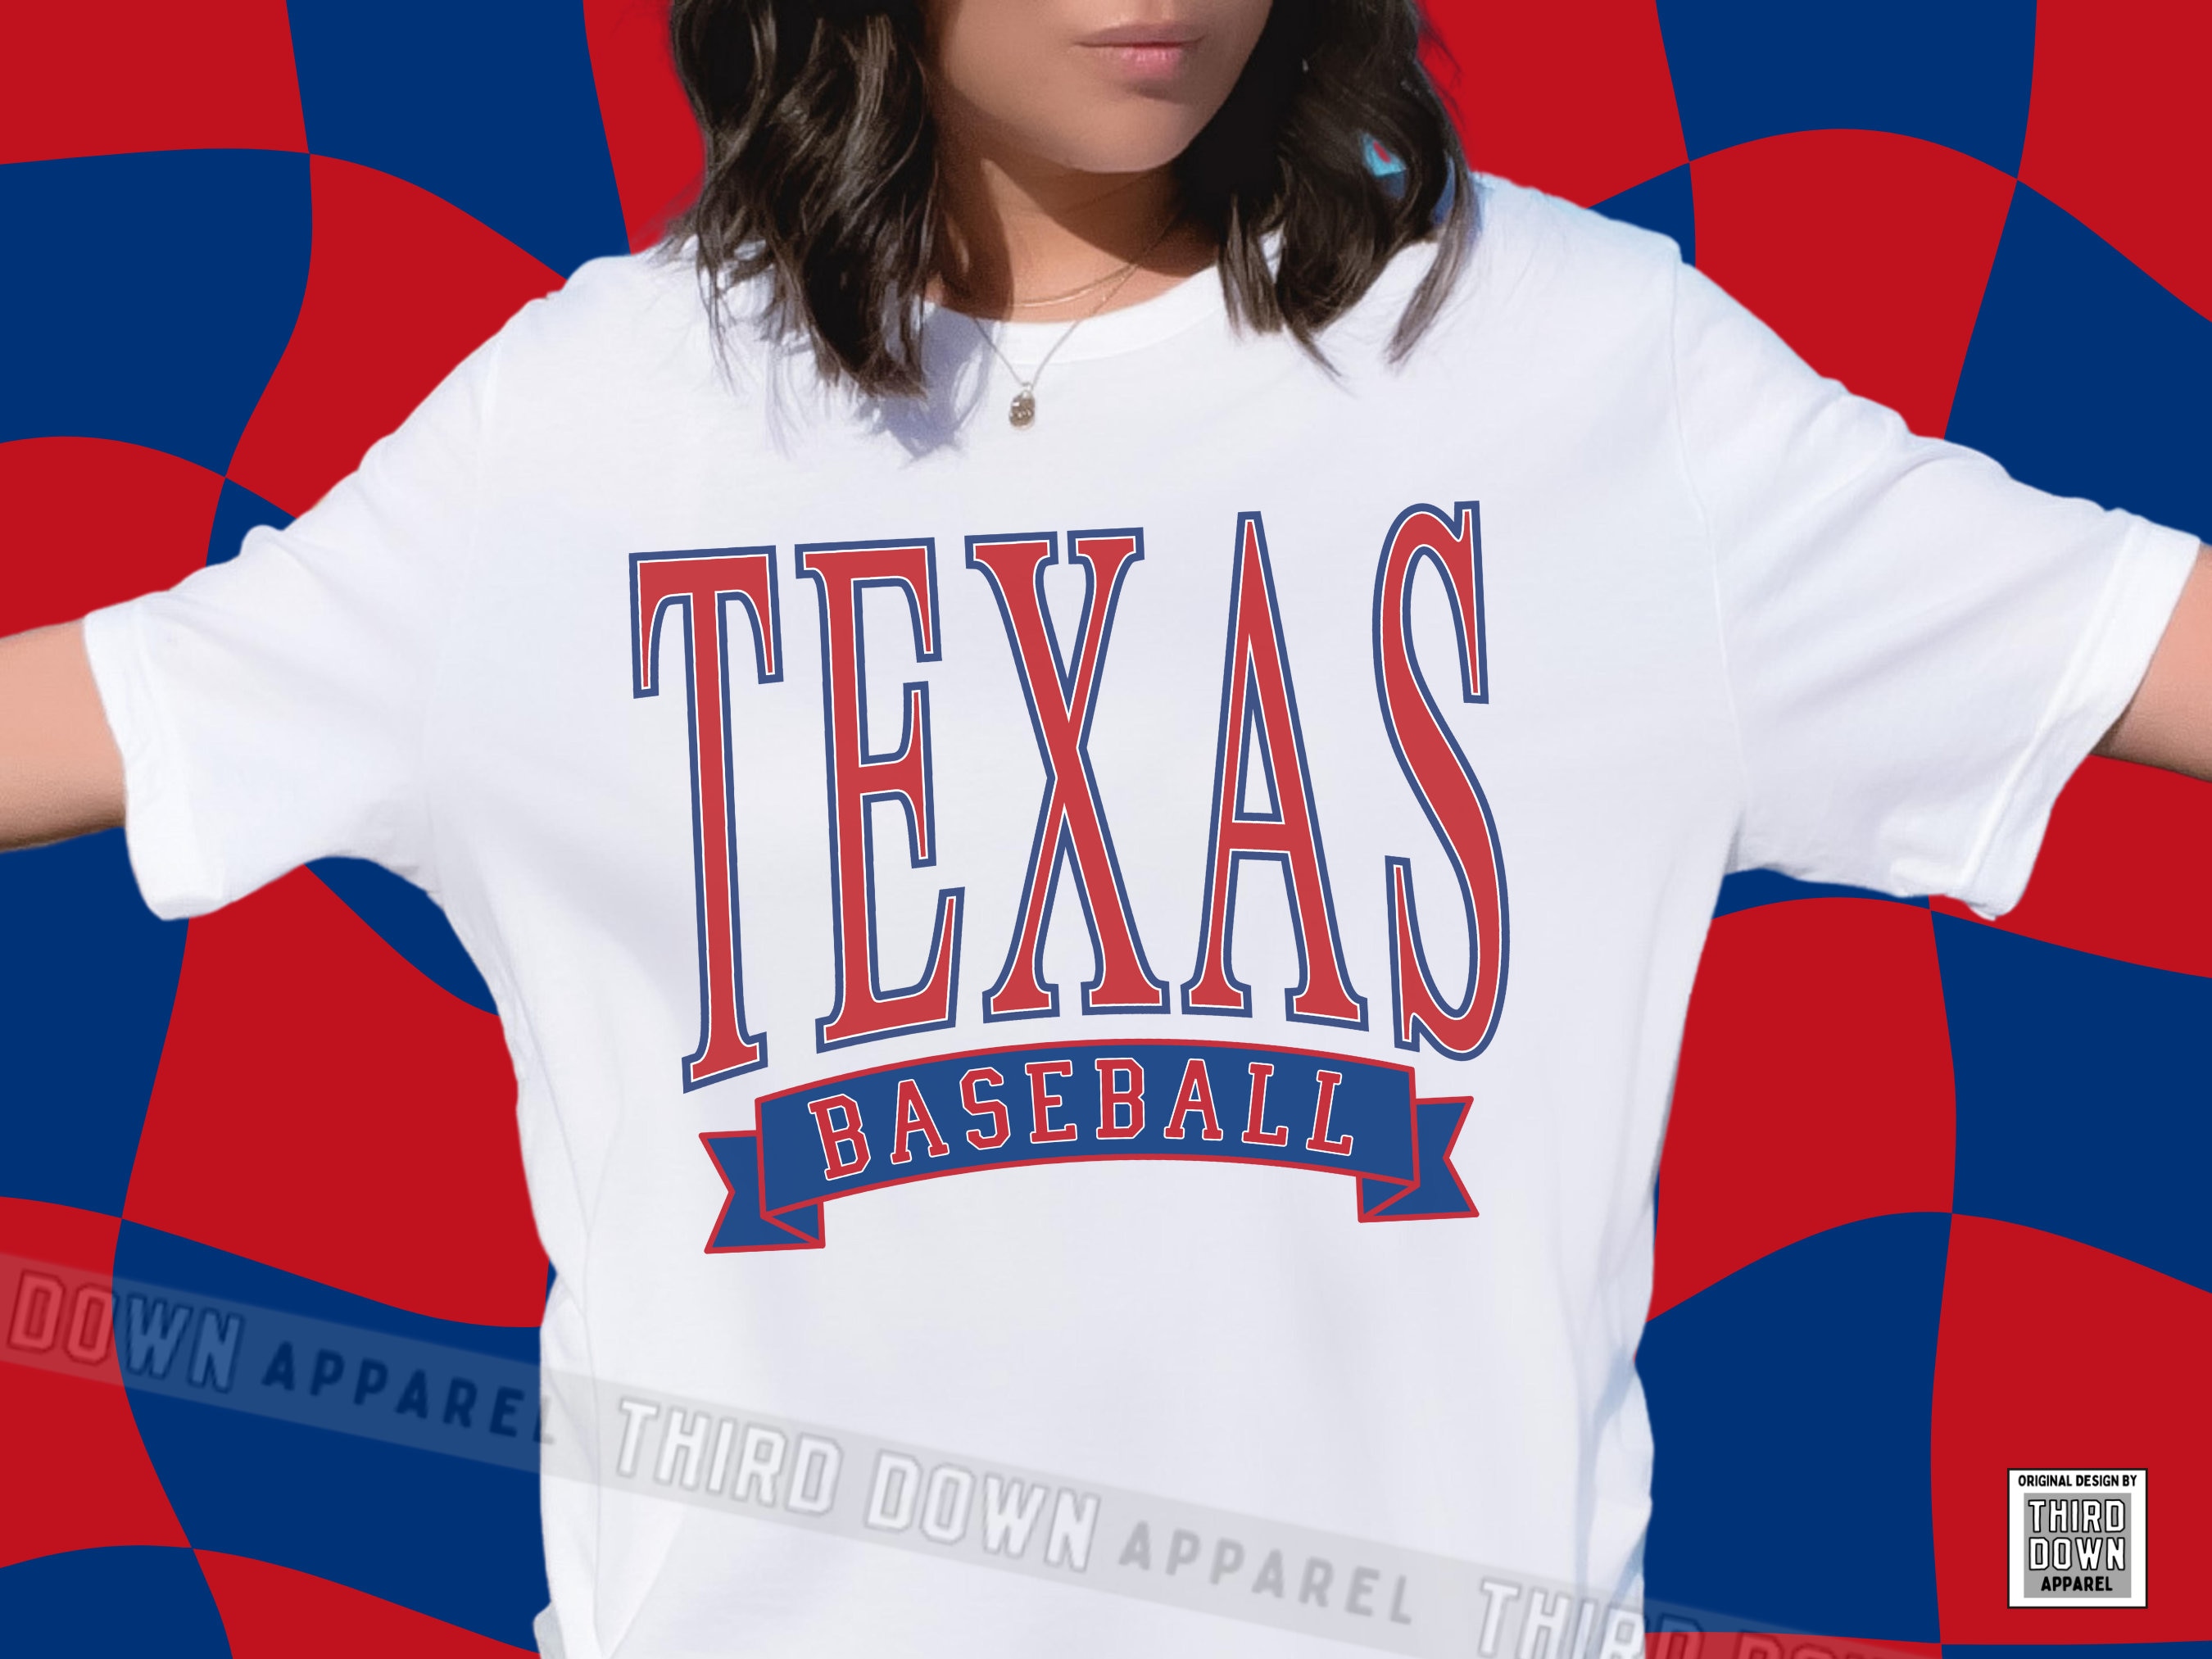 rangers baseball apparel